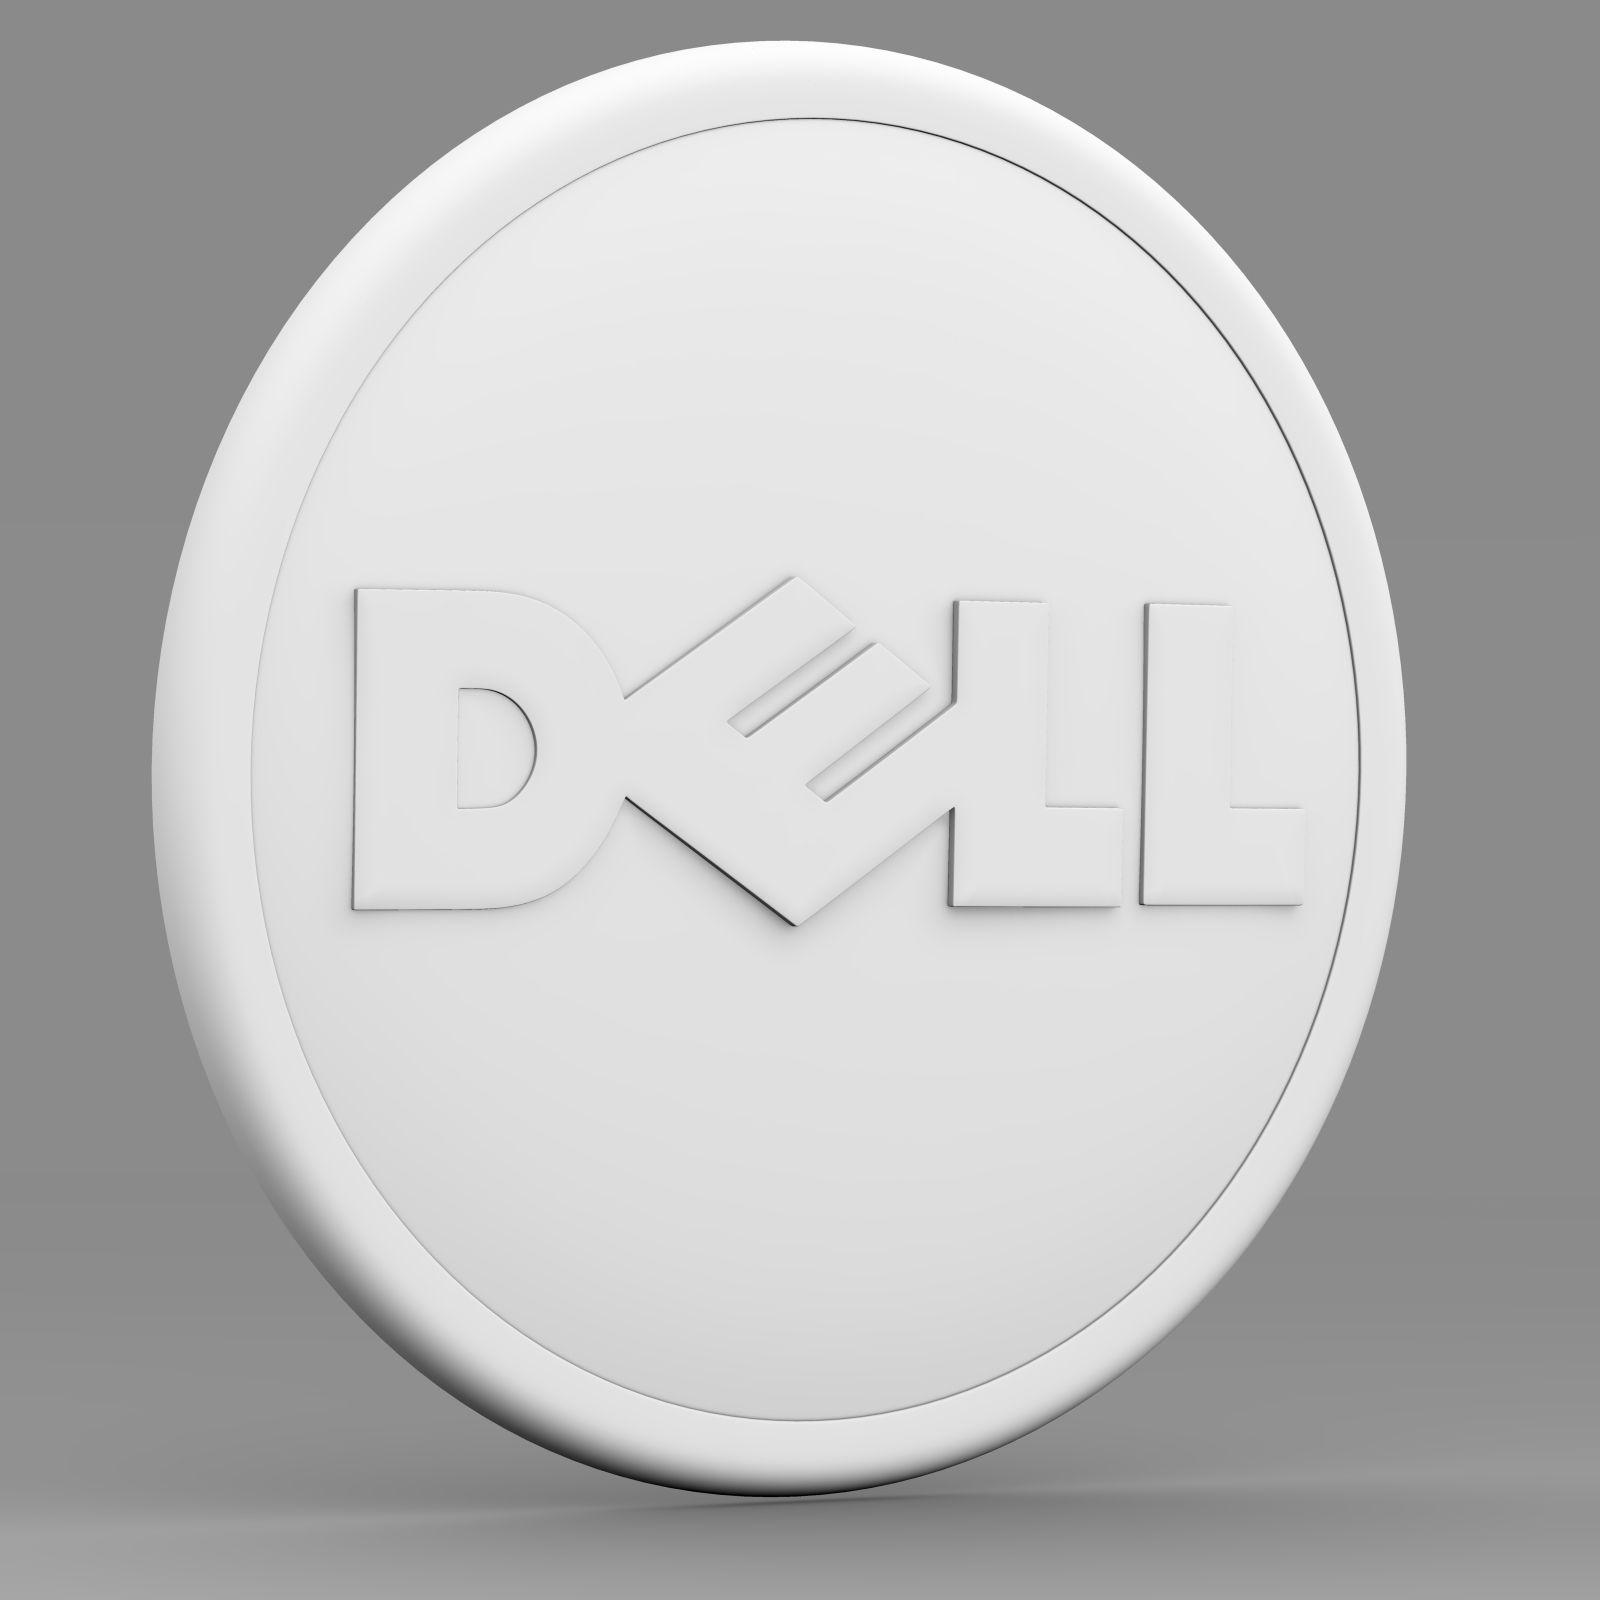 C4d Logo - Dell logo 3D Model